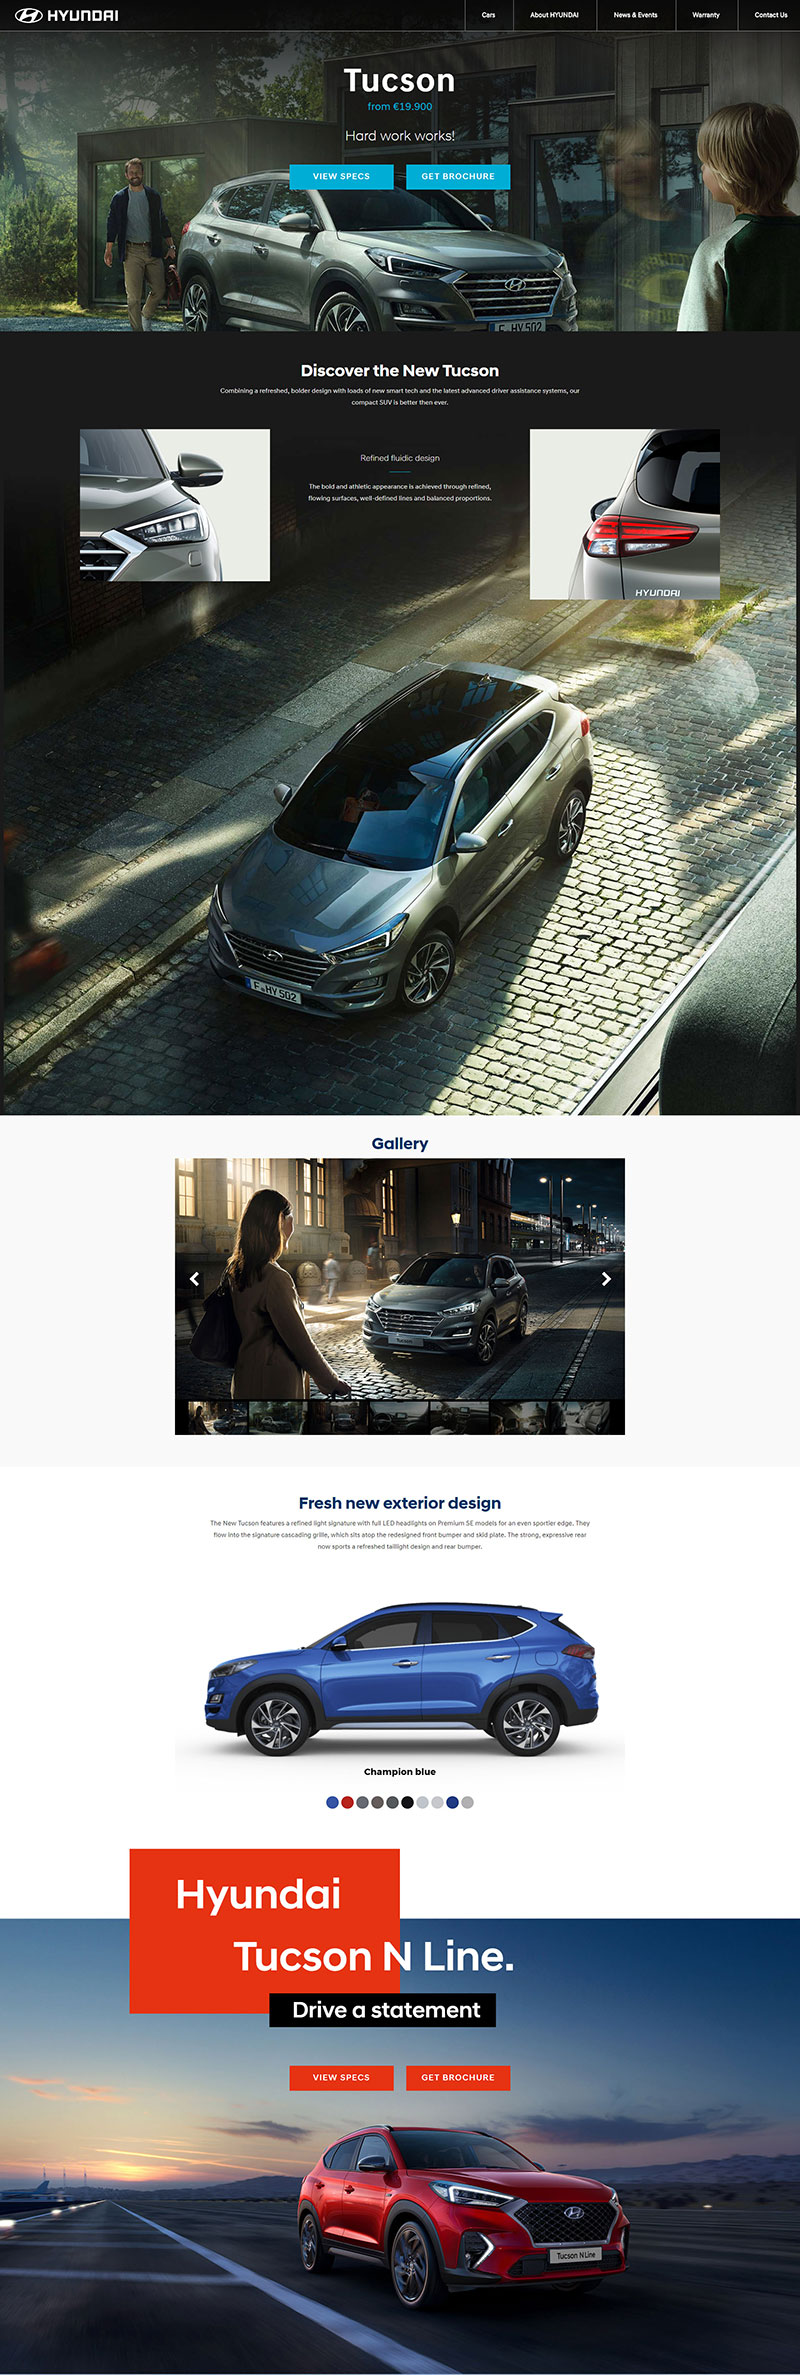 Hyundai Cyprus Website Redesign with visual aesthetics and CTAs